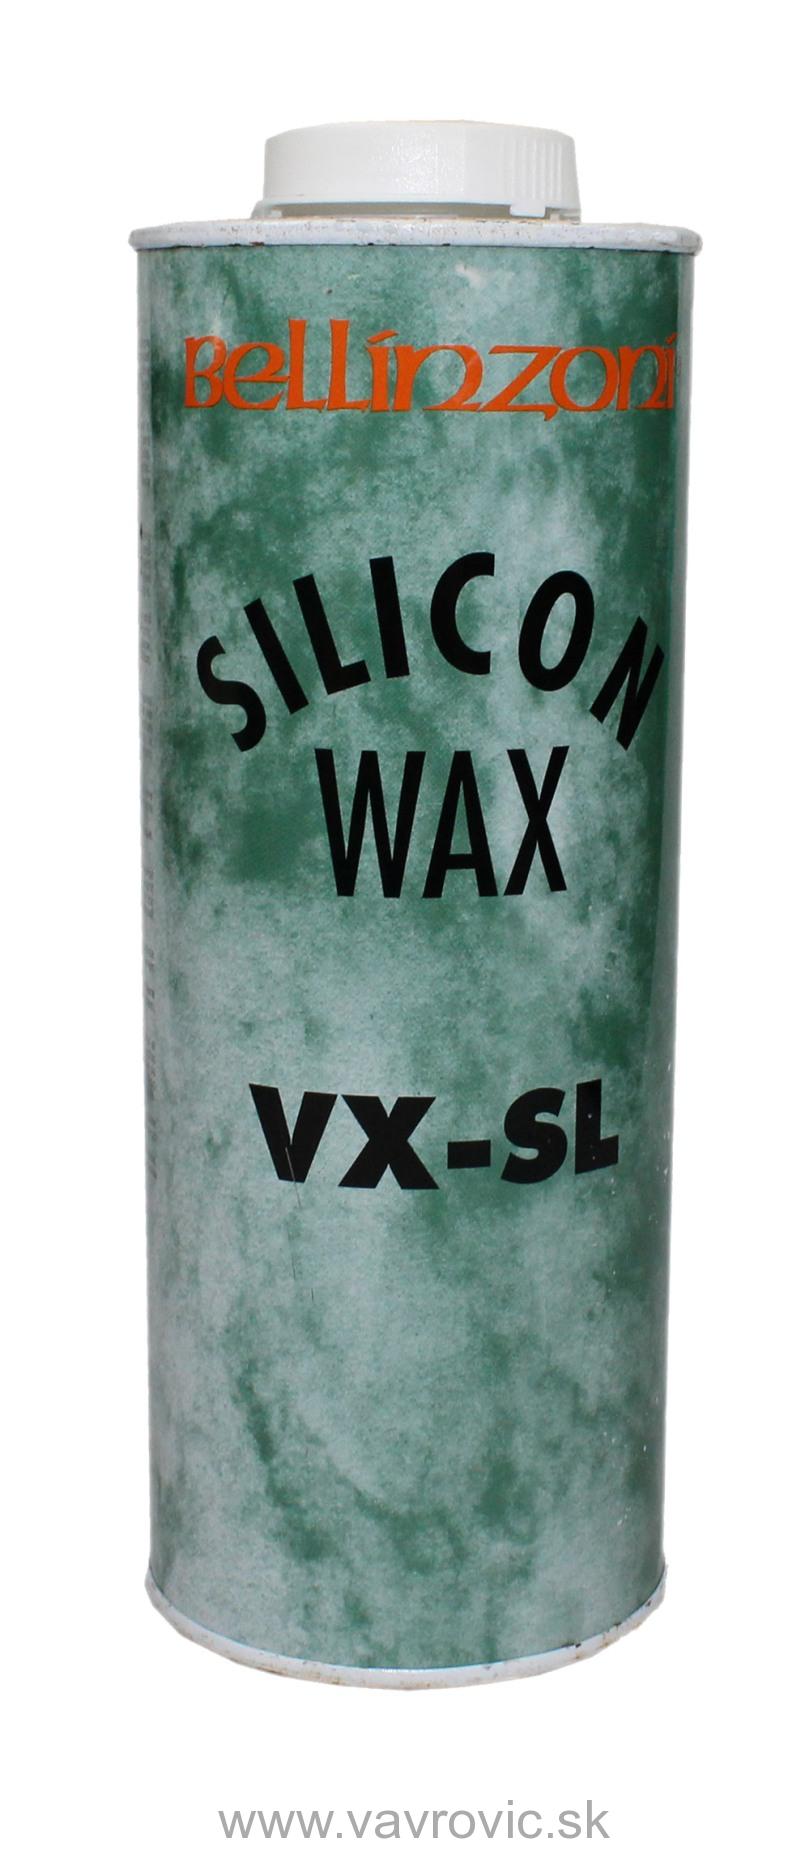 Bellinzoni - Silikónový vosk VX-SL / 1 kg